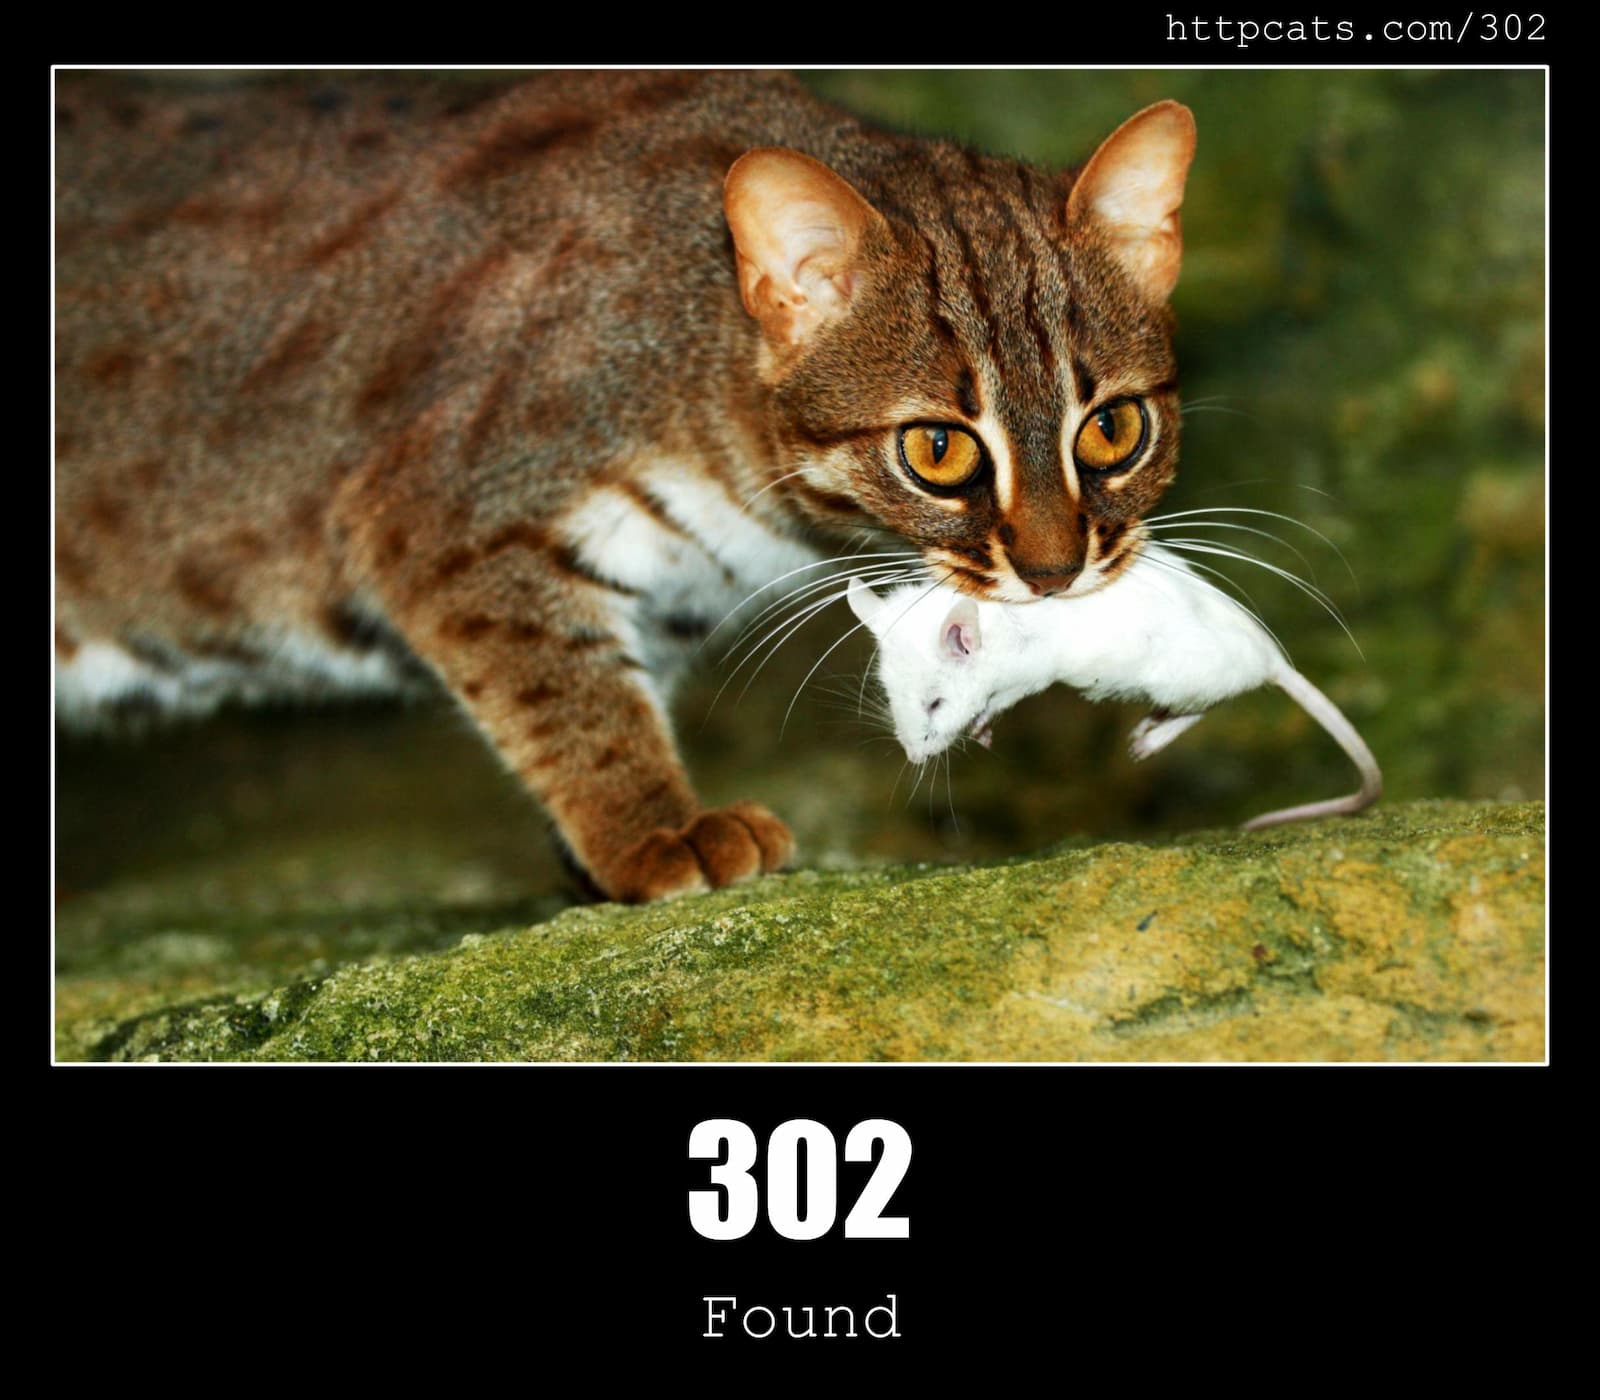 HTTP Status Code 302 Found & Cats